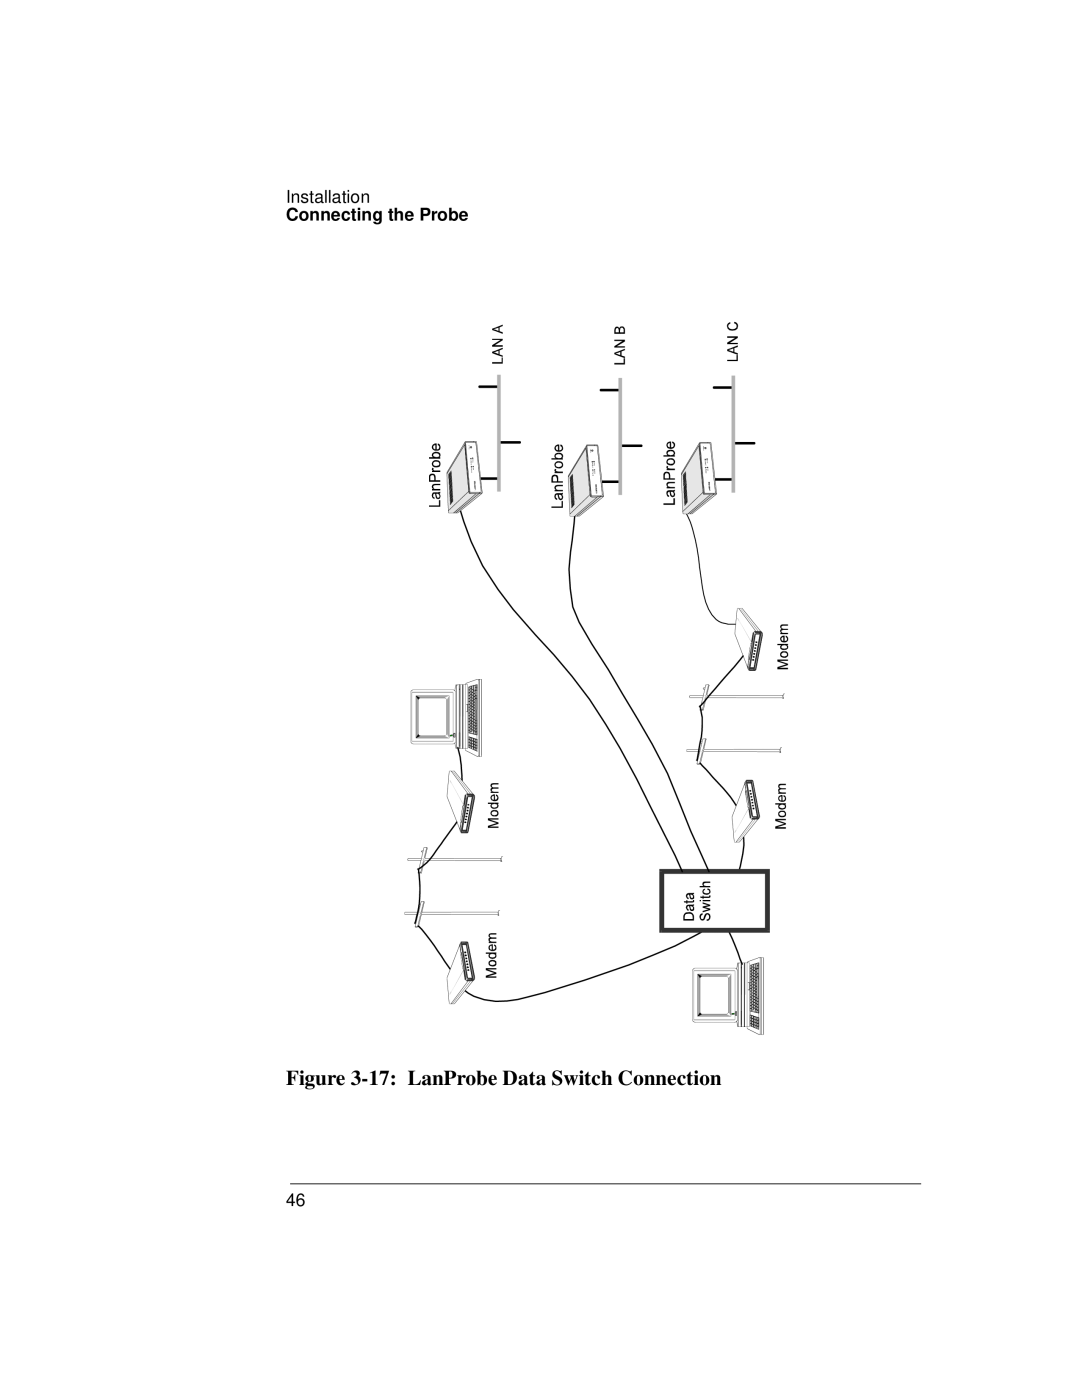 IBM 4986B LanProbe manual 17 LanProbe Data Switch Connection, Installation, Connecting the Probe 